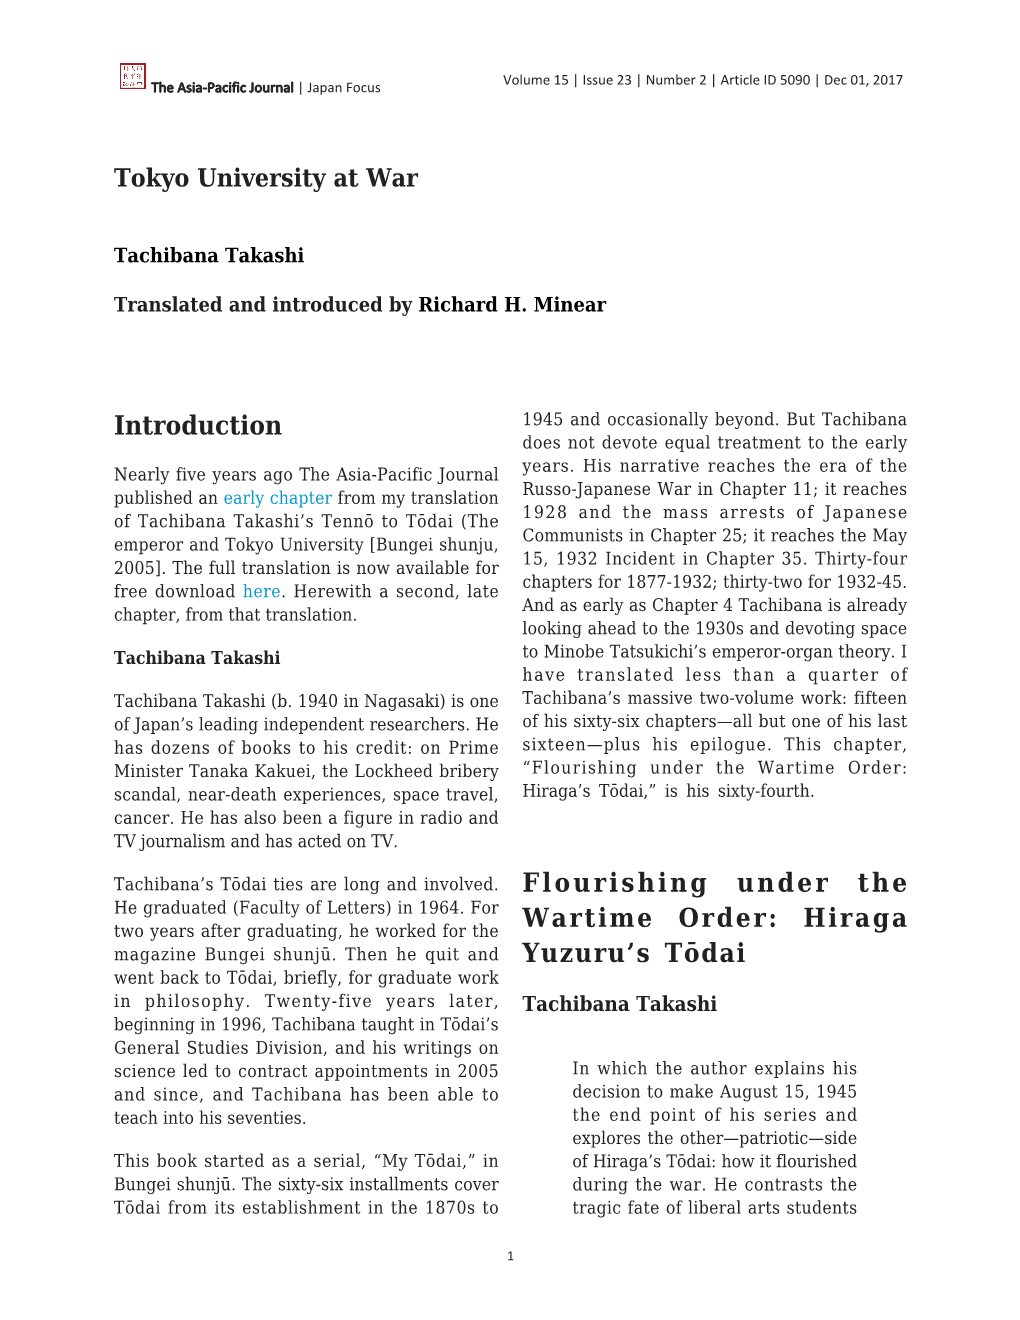 Introduction Flourishing Under the Wartime Order: Hiraga Yuzuru's Tōdai